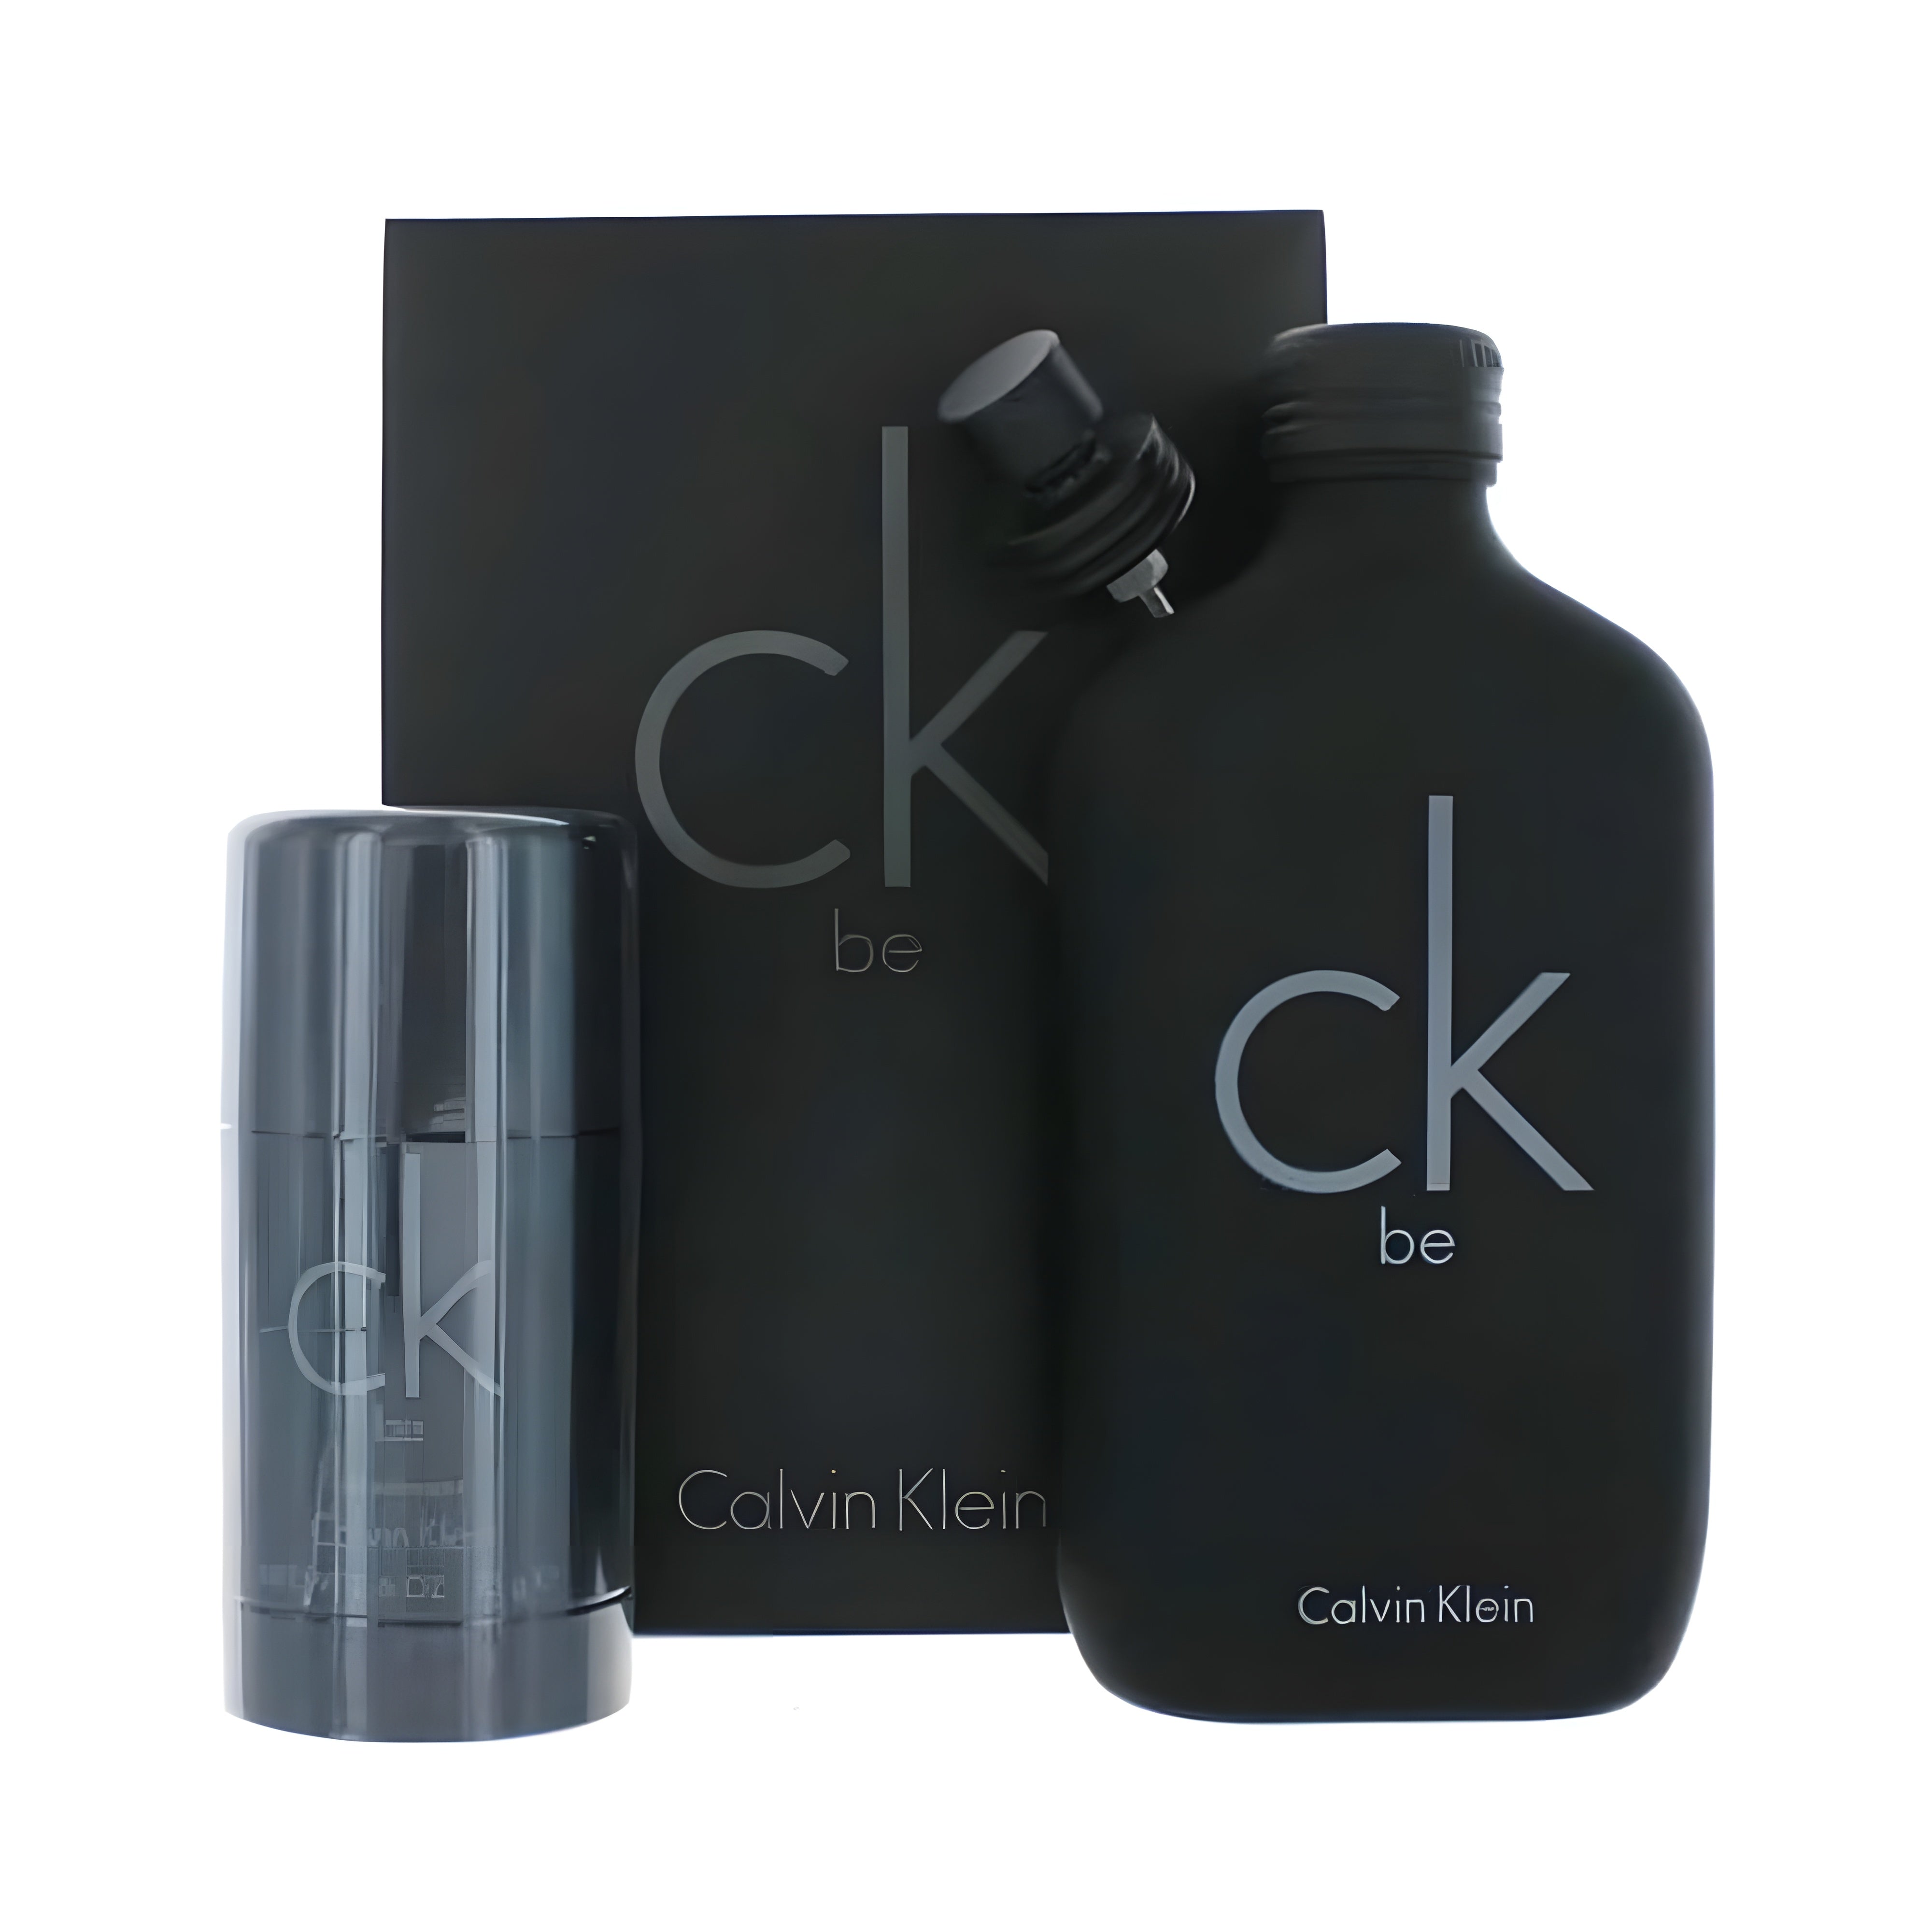 Calvin Klein CK Be Deodorant Travel Set | My Perfume Shop Australia